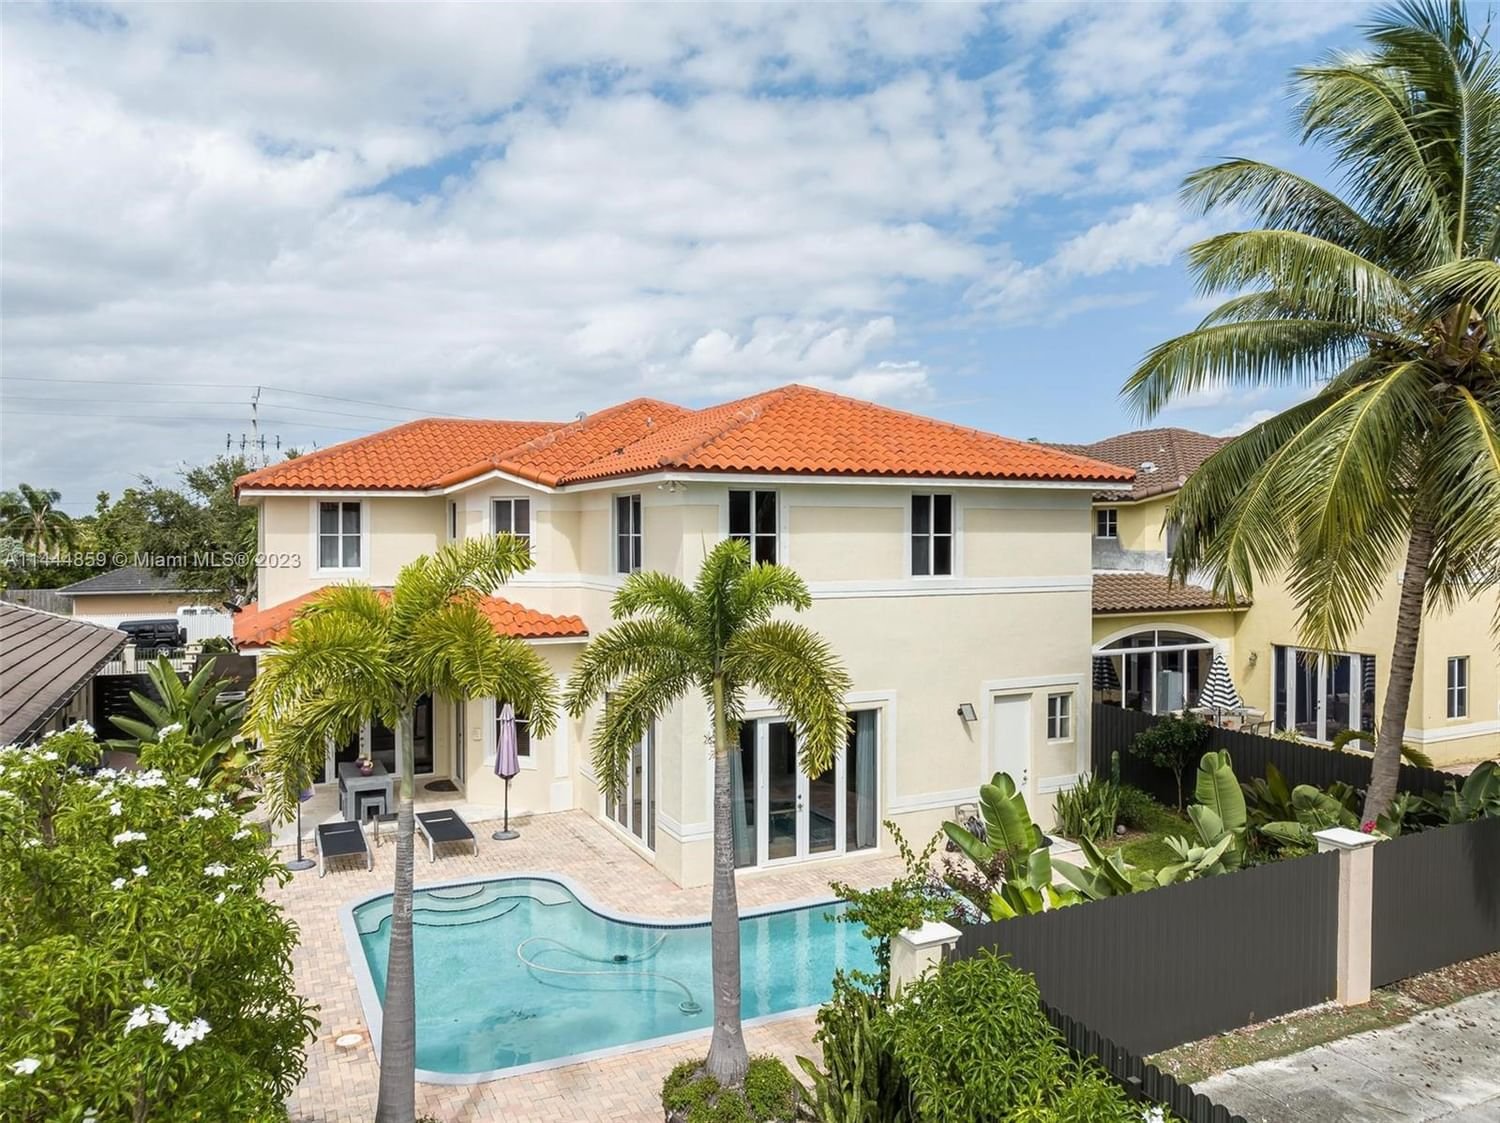 Real estate property located at 2643 139th Ave, Miami-Dade County, Miami, FL